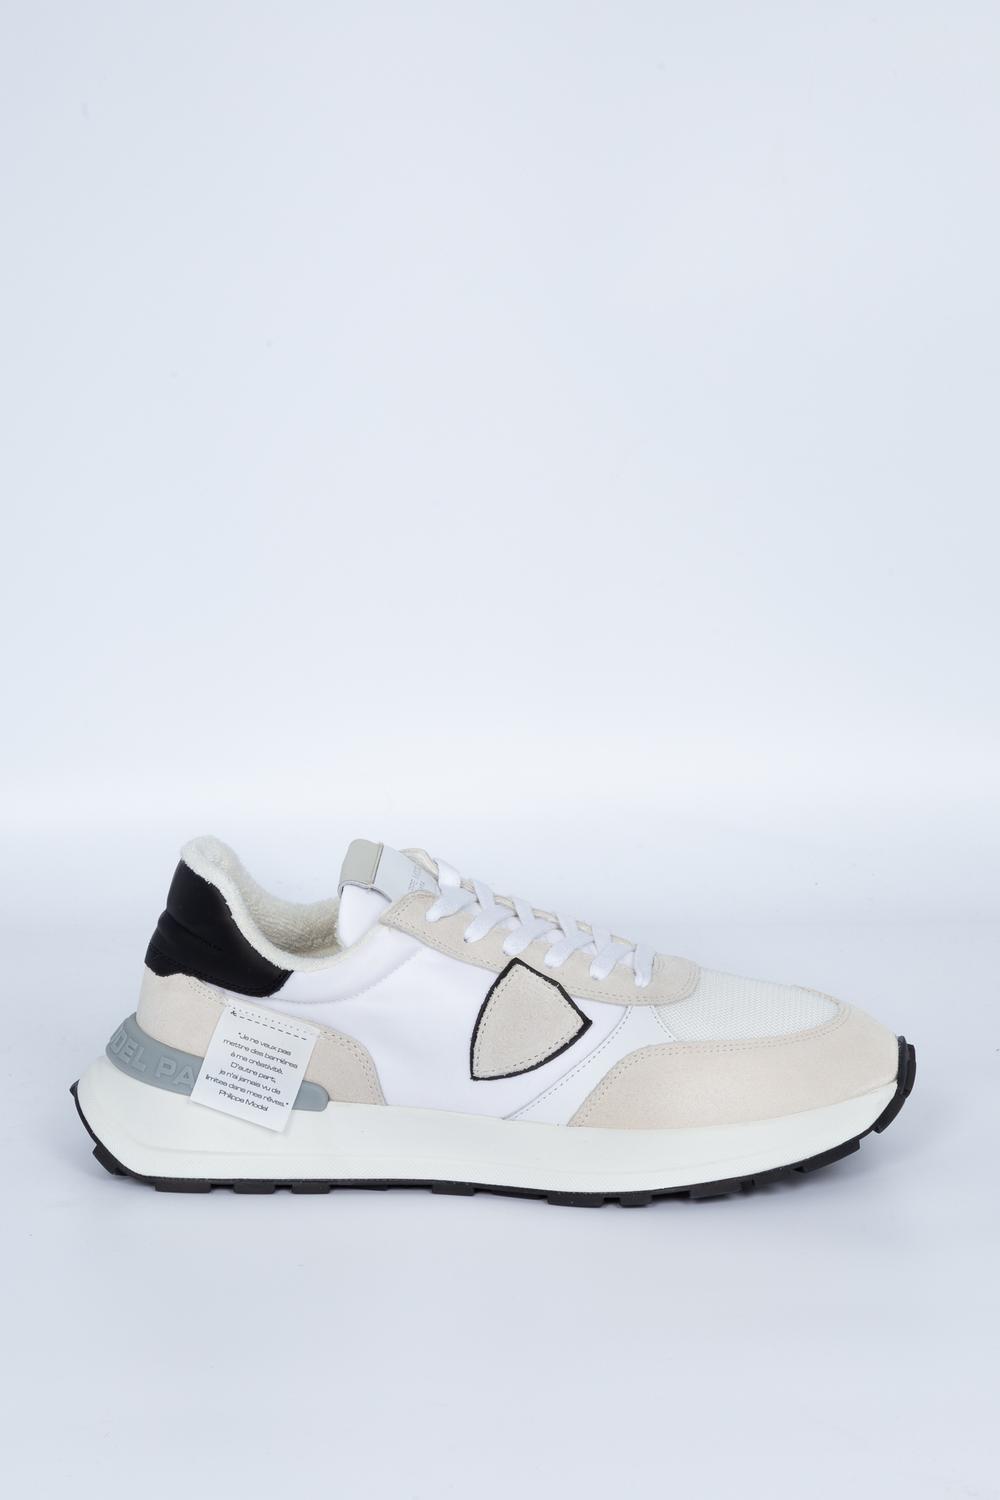 Philippe Model - Sneaker ANTIBES Mondial Bianco/Nero Uomo - ATLU W002